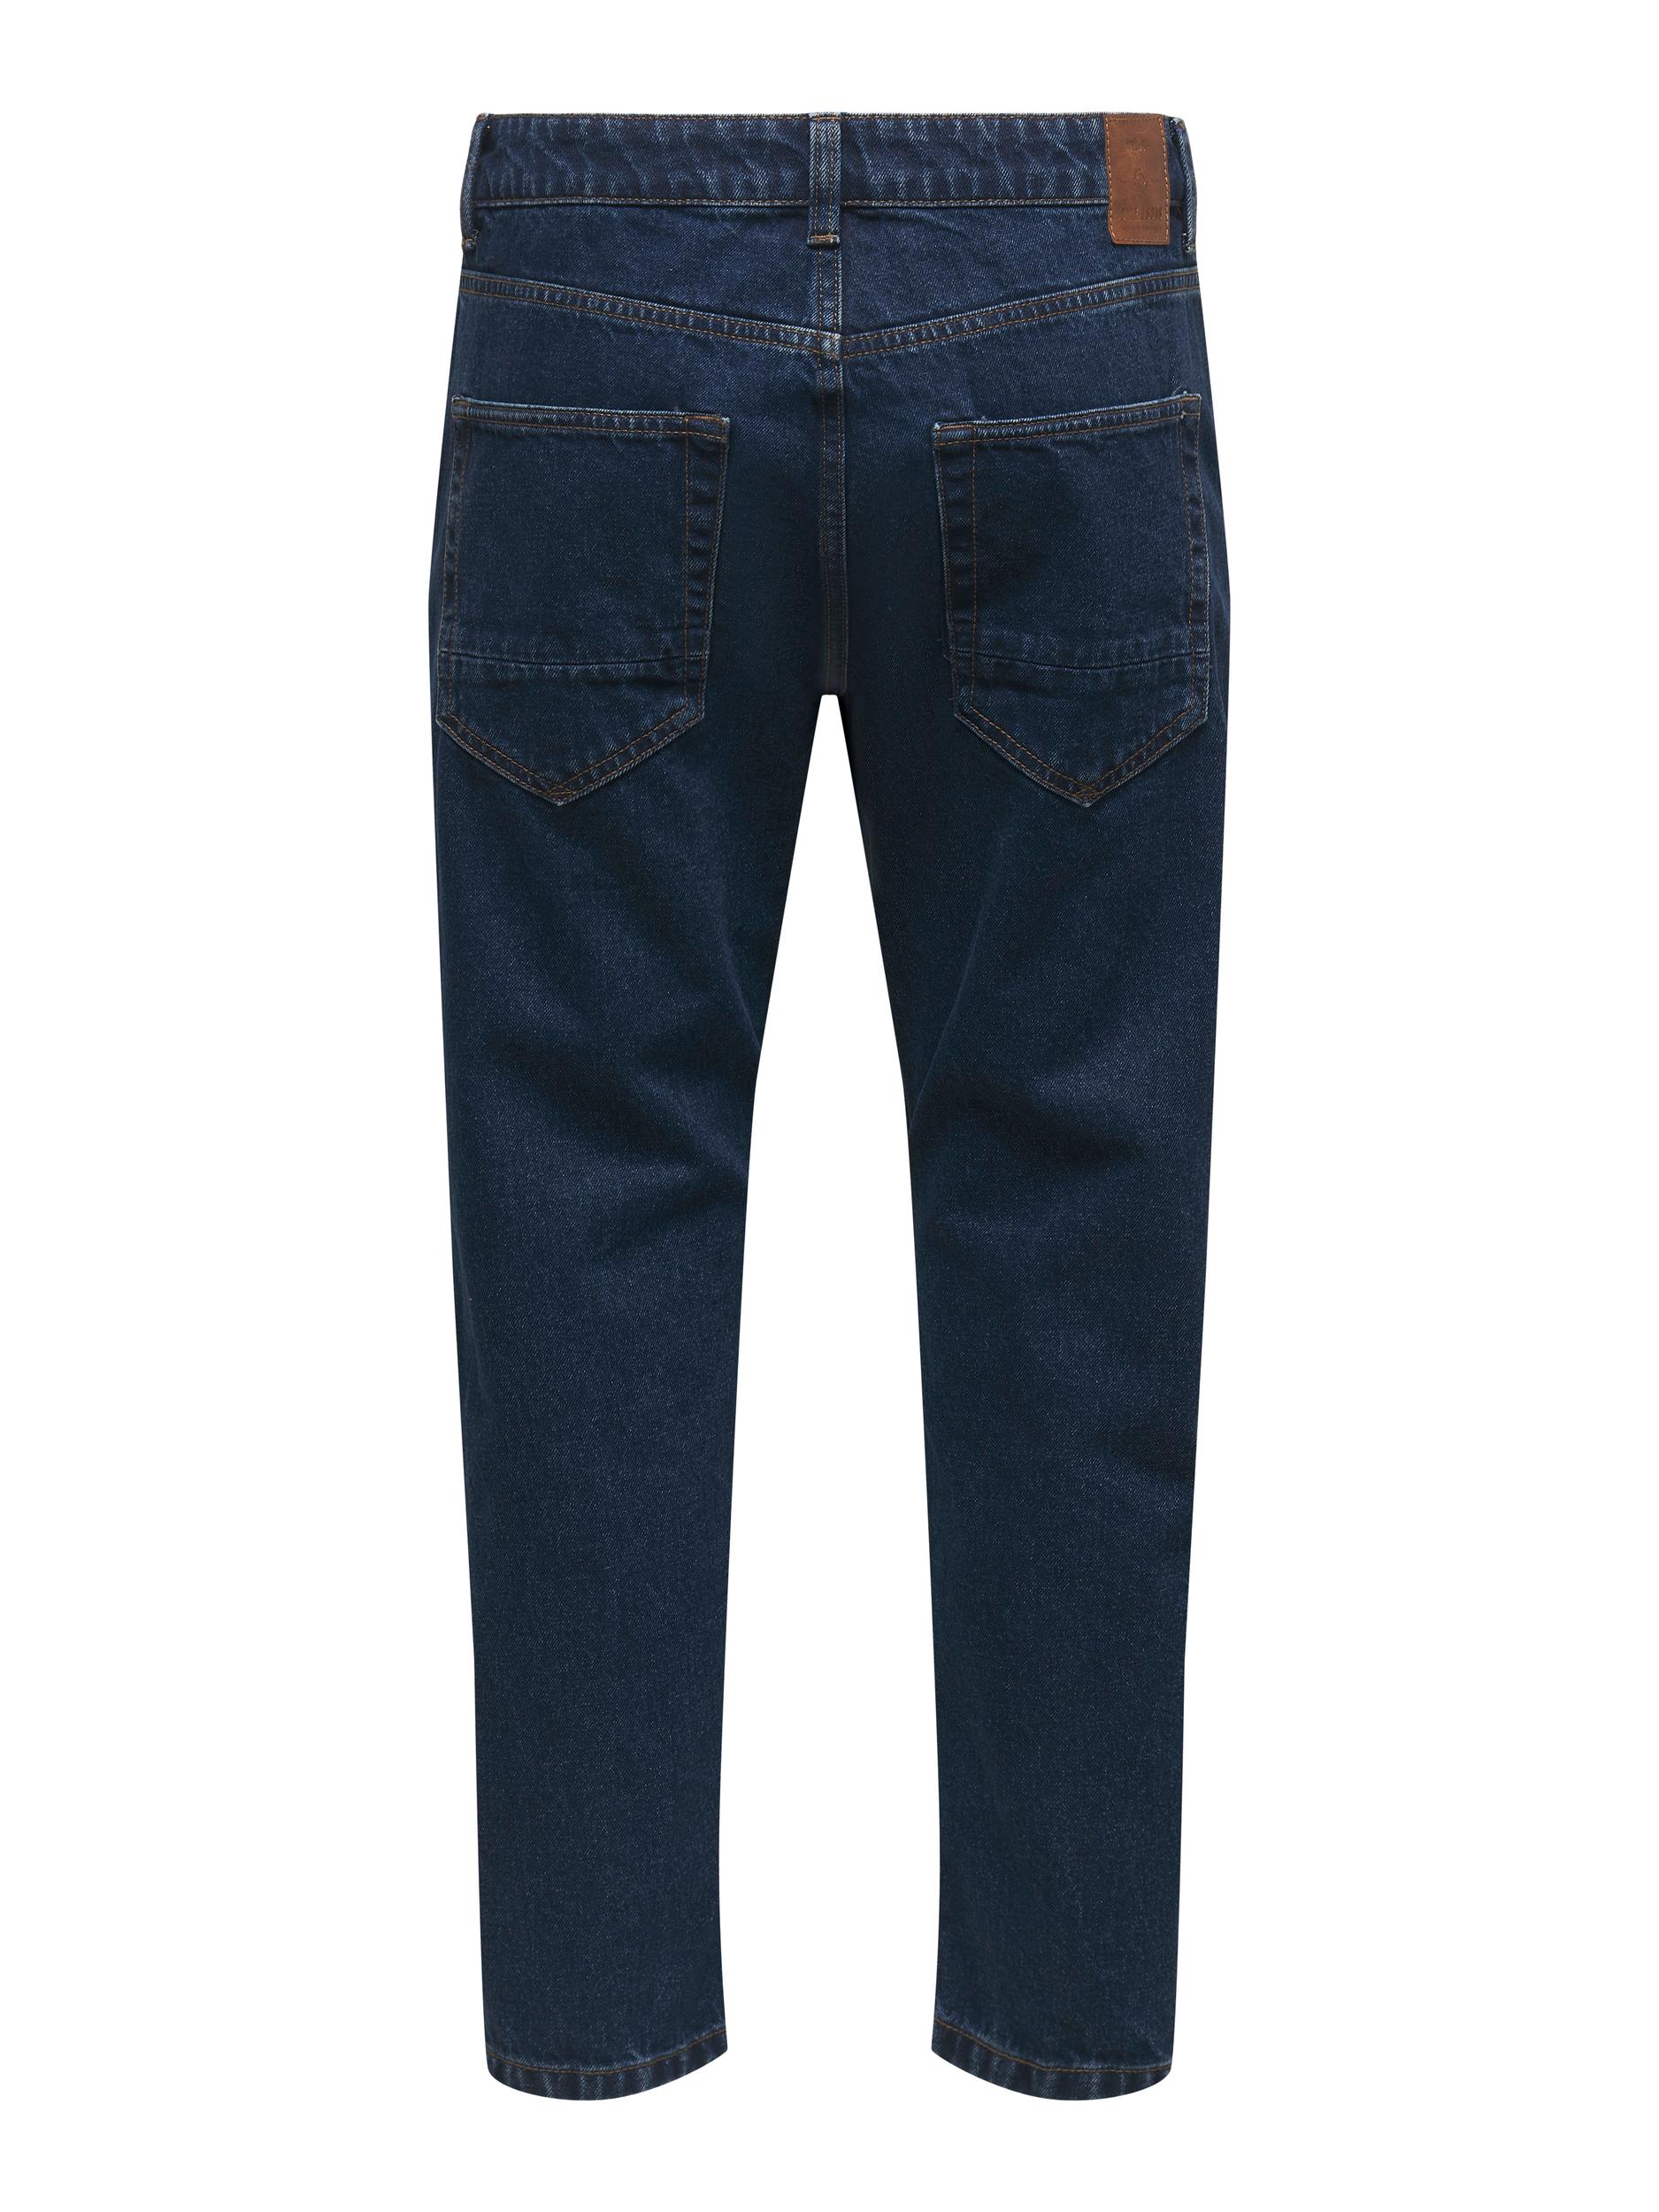 Only & Sons Avi Beam Jeans, Blue Denim, W30/L32